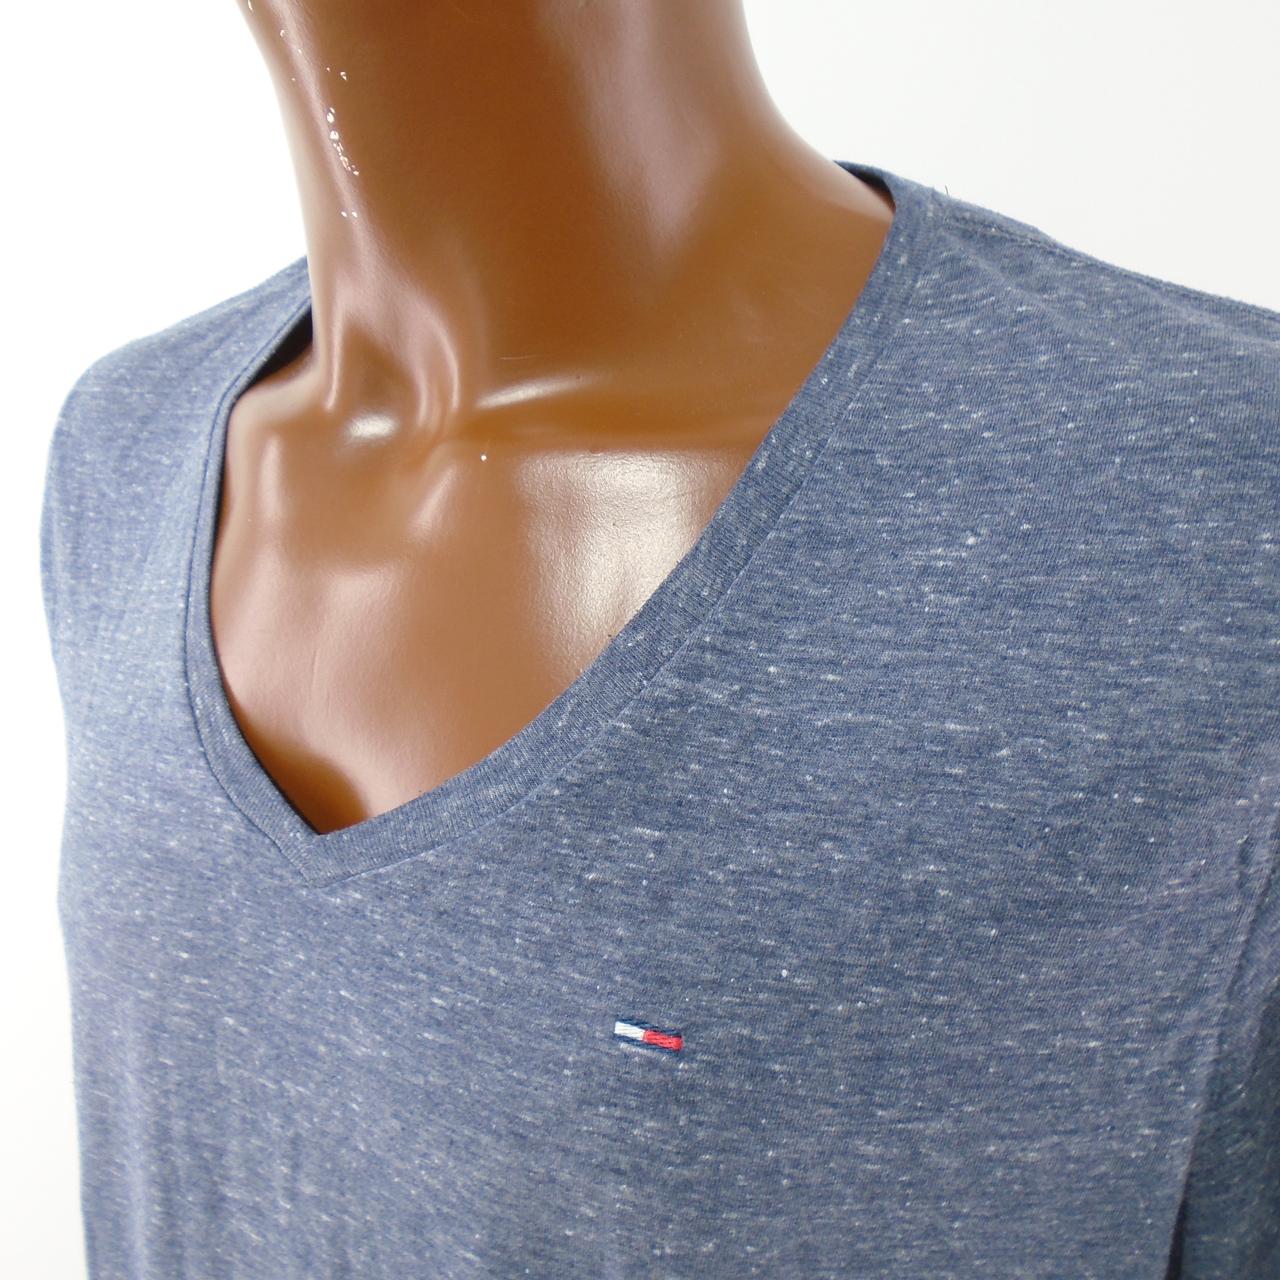 Men's T-Shirt Tommy Hilfiger. Grey. L. Used. Good